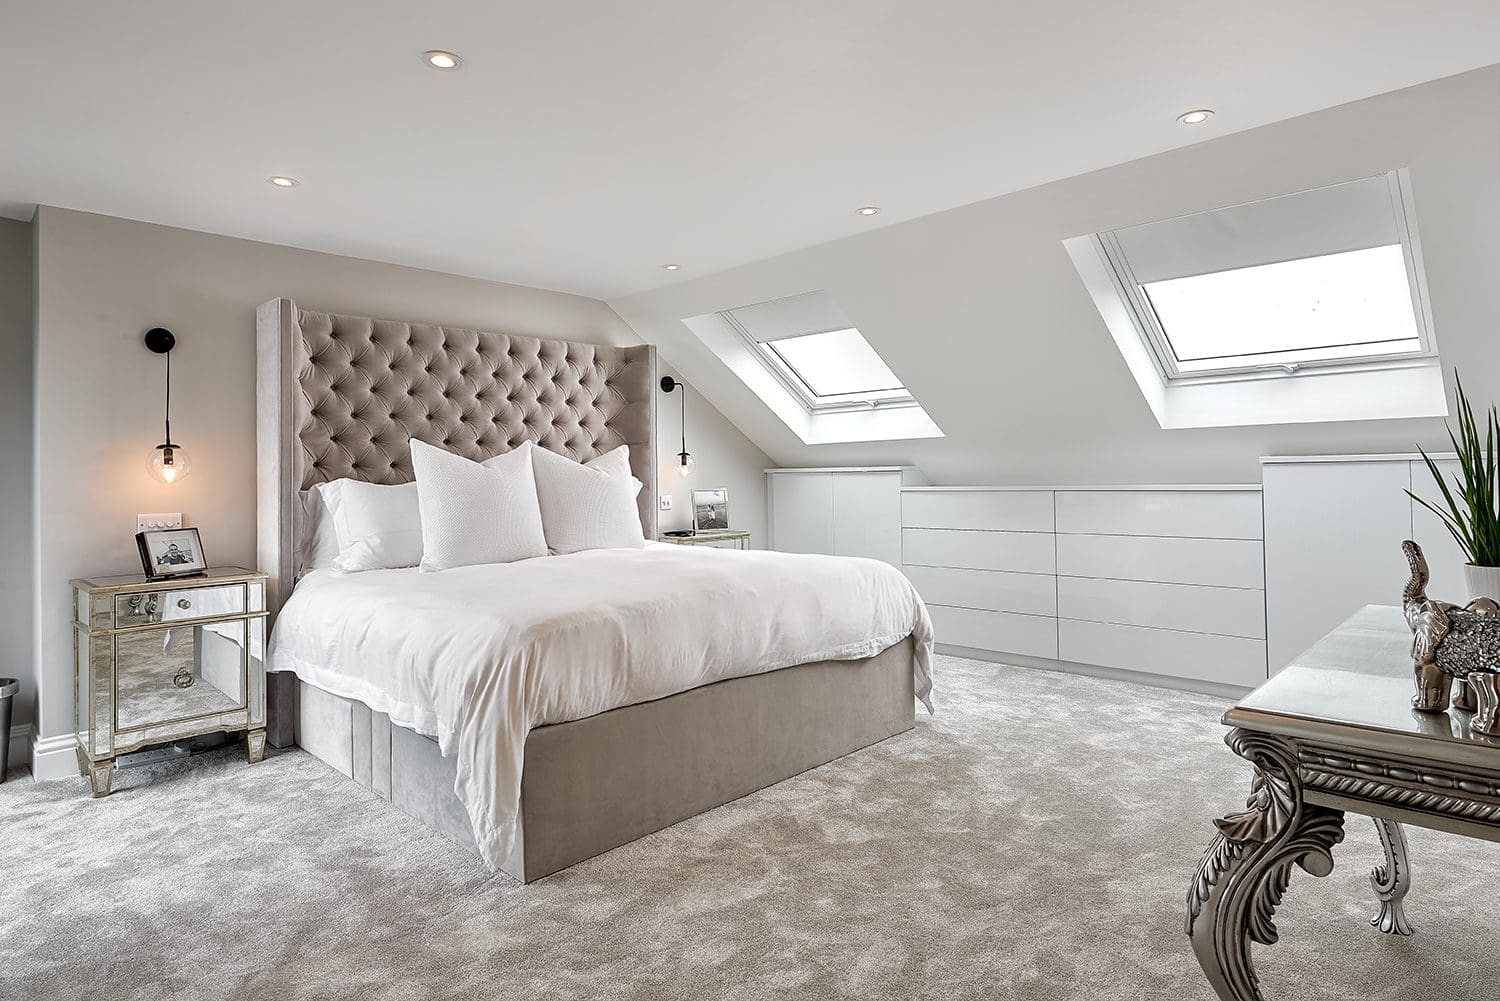 master bedroom loft conversion with luxury interior and velux windows